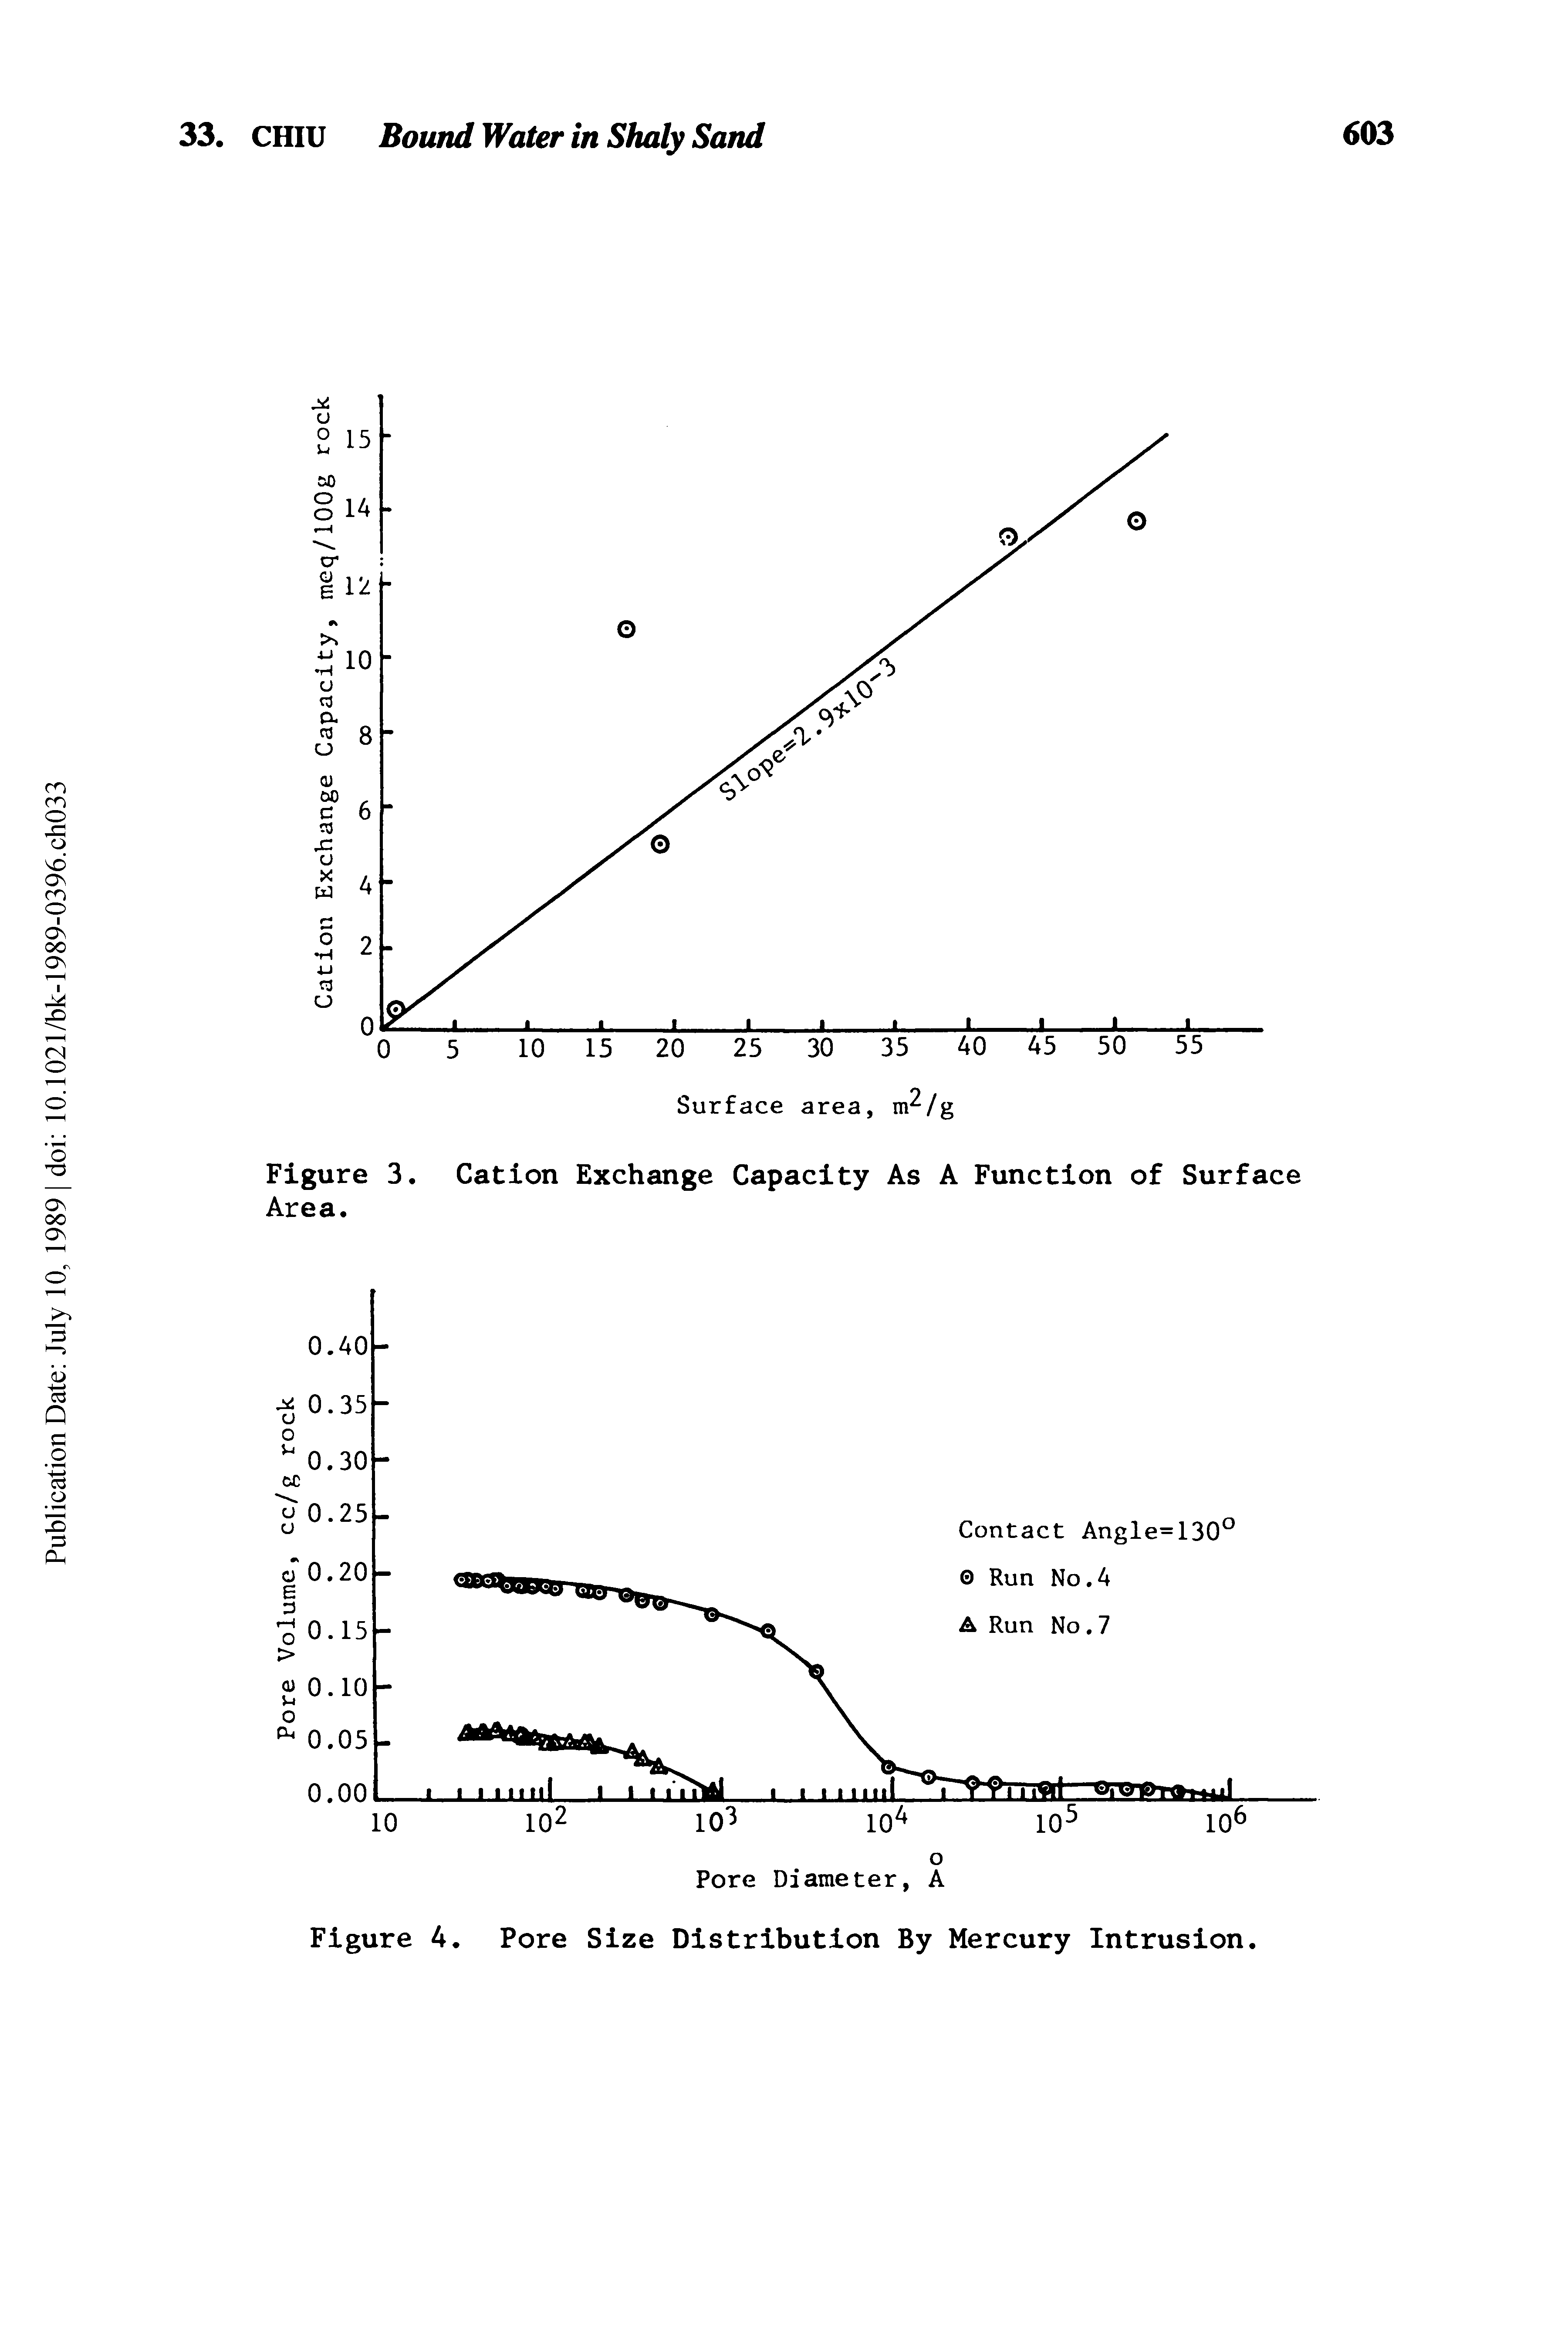 Figure 4. Pore Size Distribution By Mercury Intrusion.